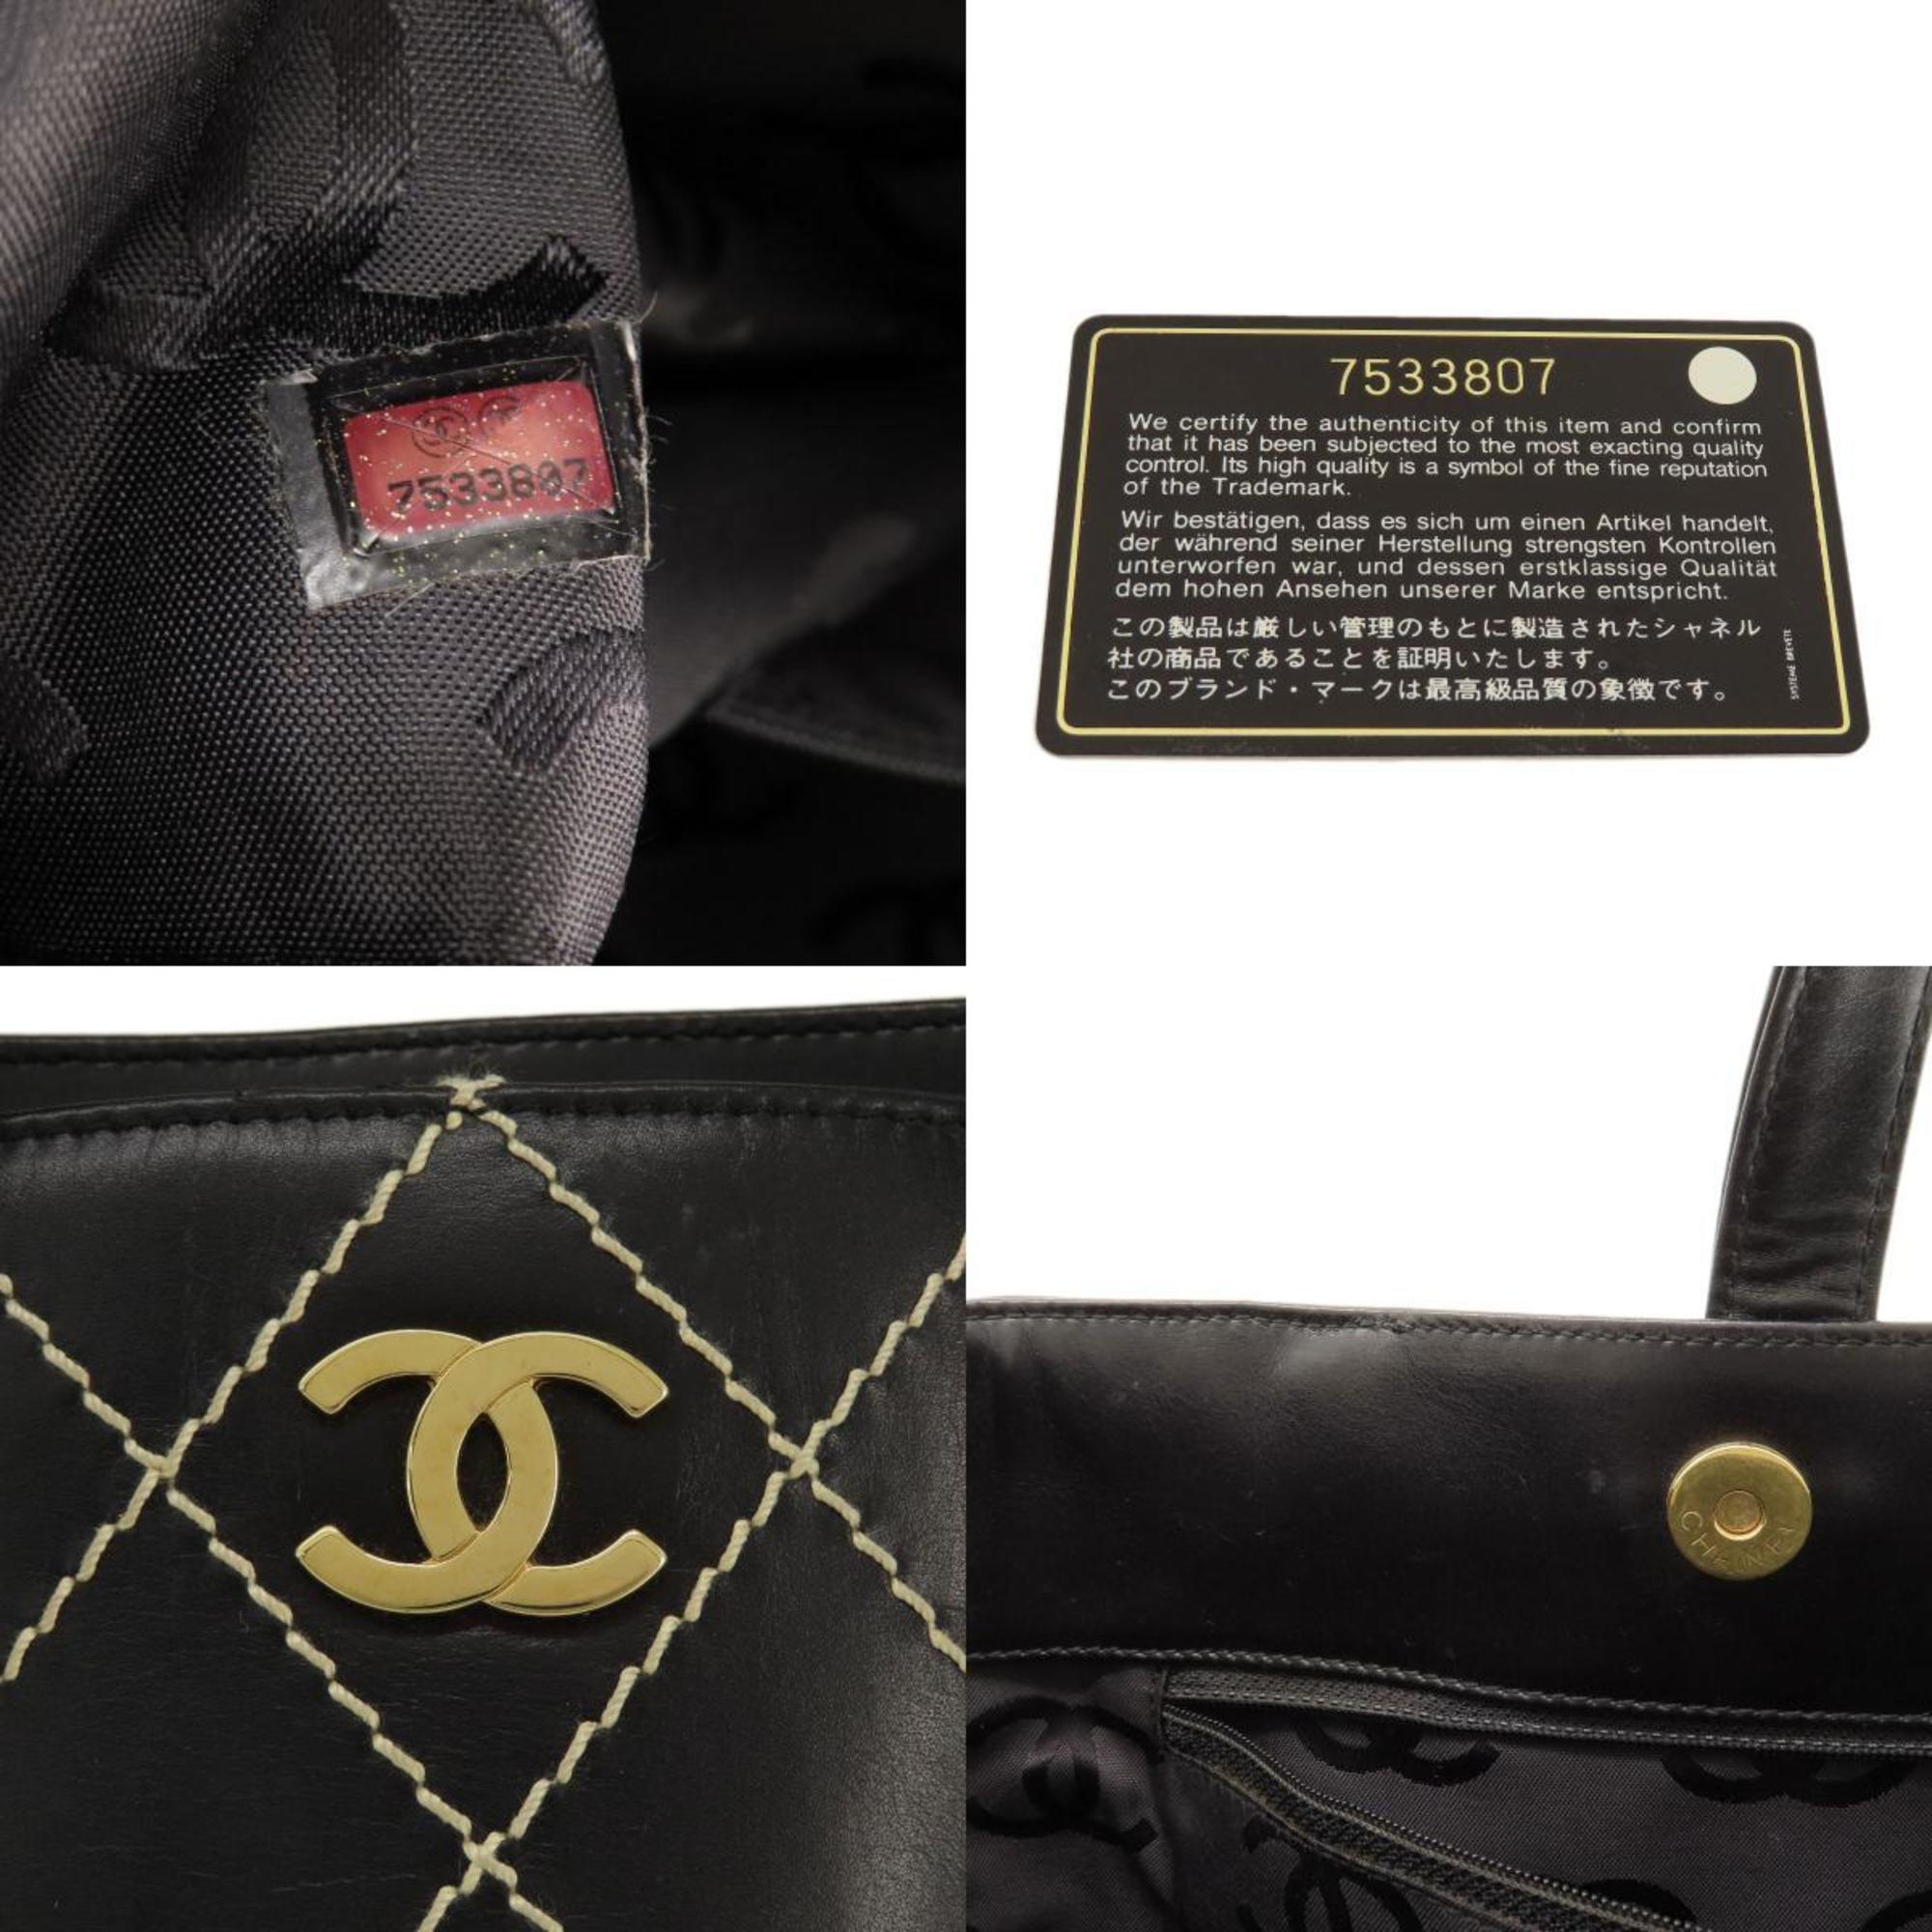 Chanel W-stitch bag, tote calf leather, women's